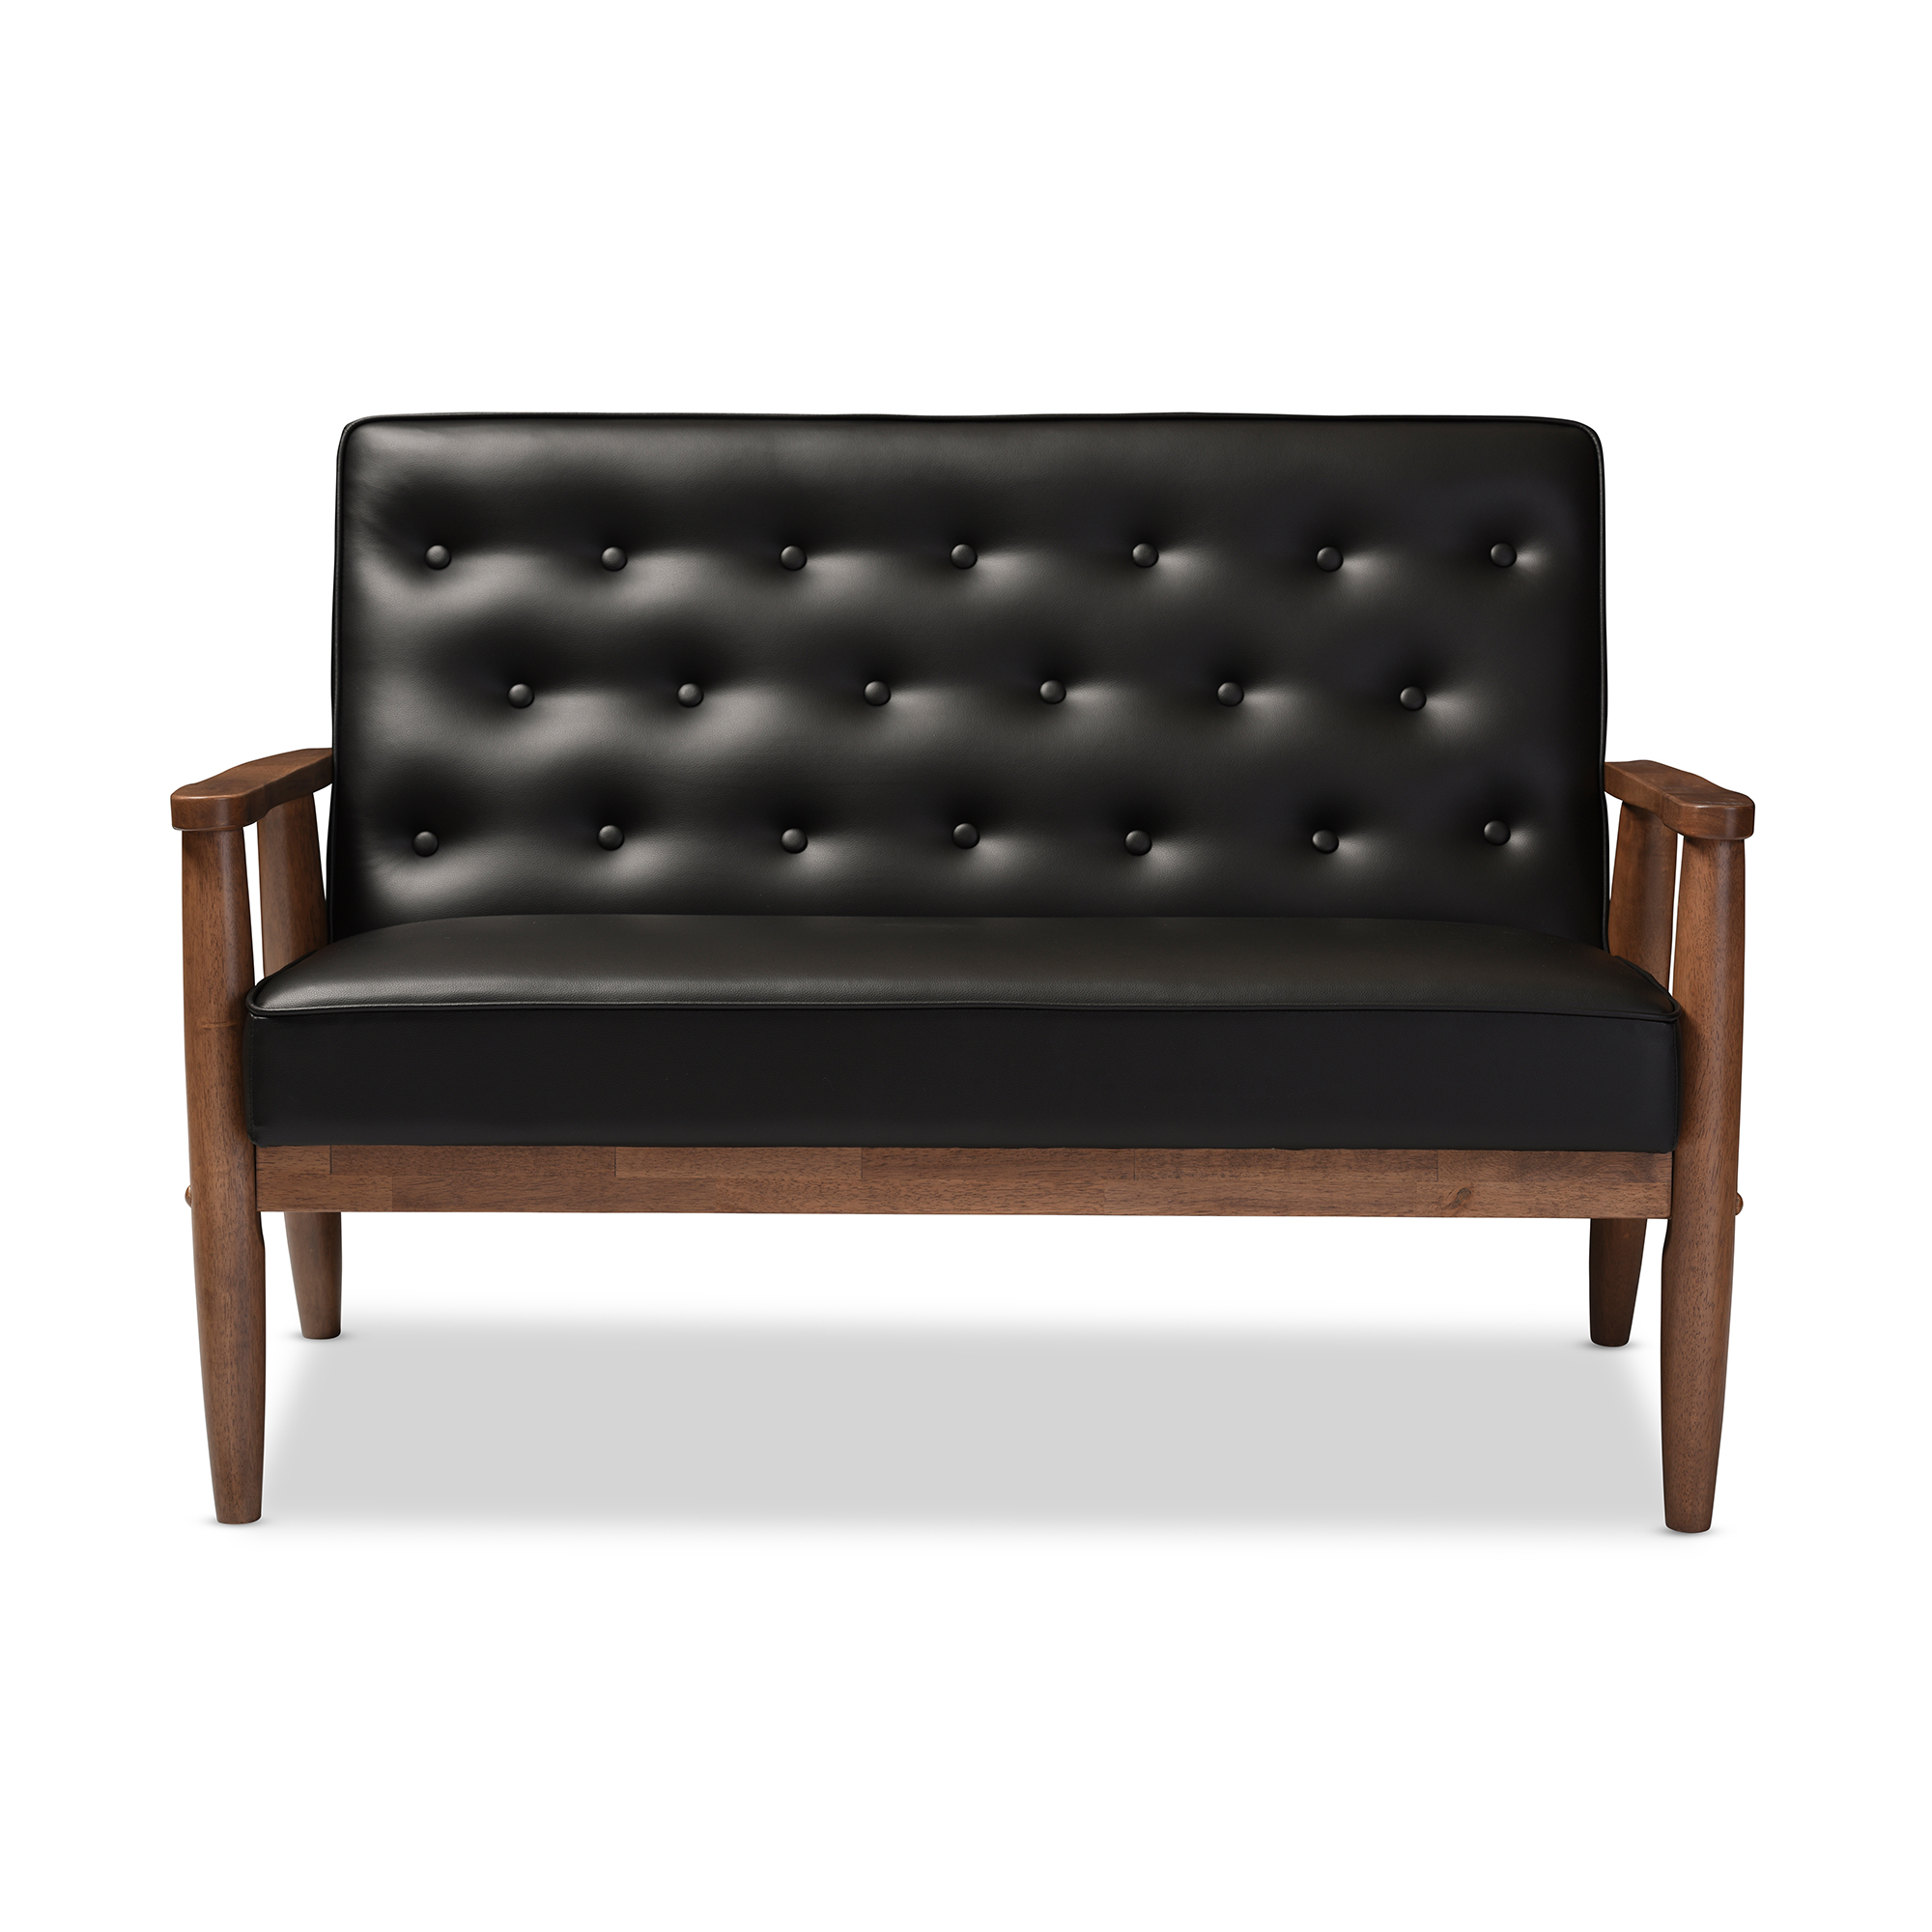 Baxton Studio Sorrento Mid-century Retro Modern Black Faux Leather Upholstered Wooden 2-seater Loveseat